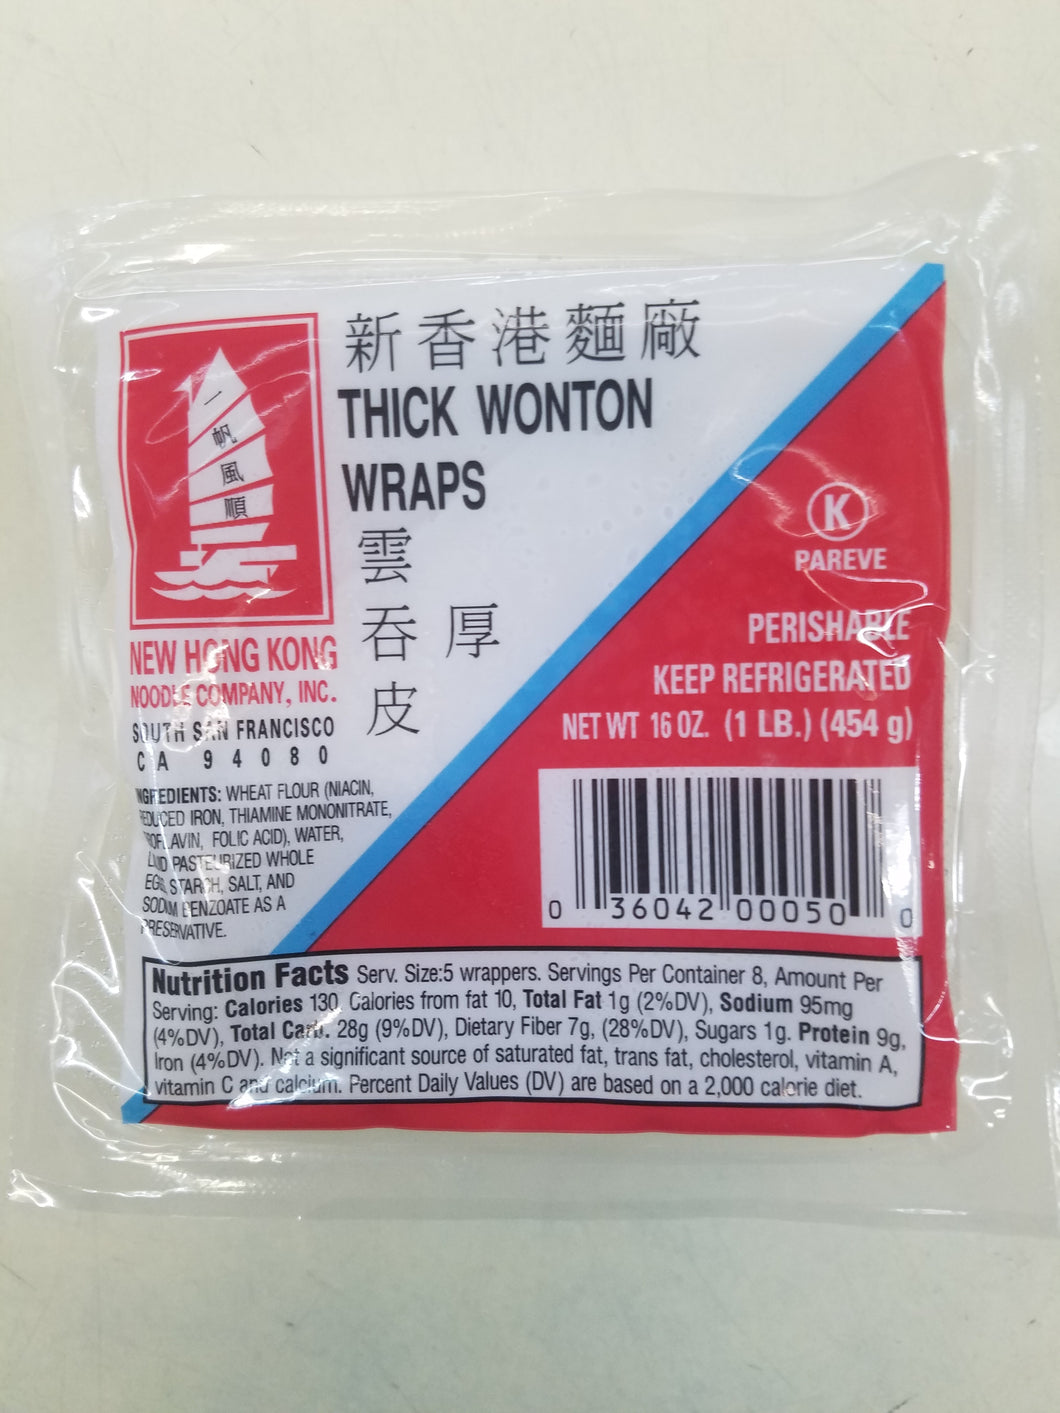 New Hong Kong Thick Wonton Wraps